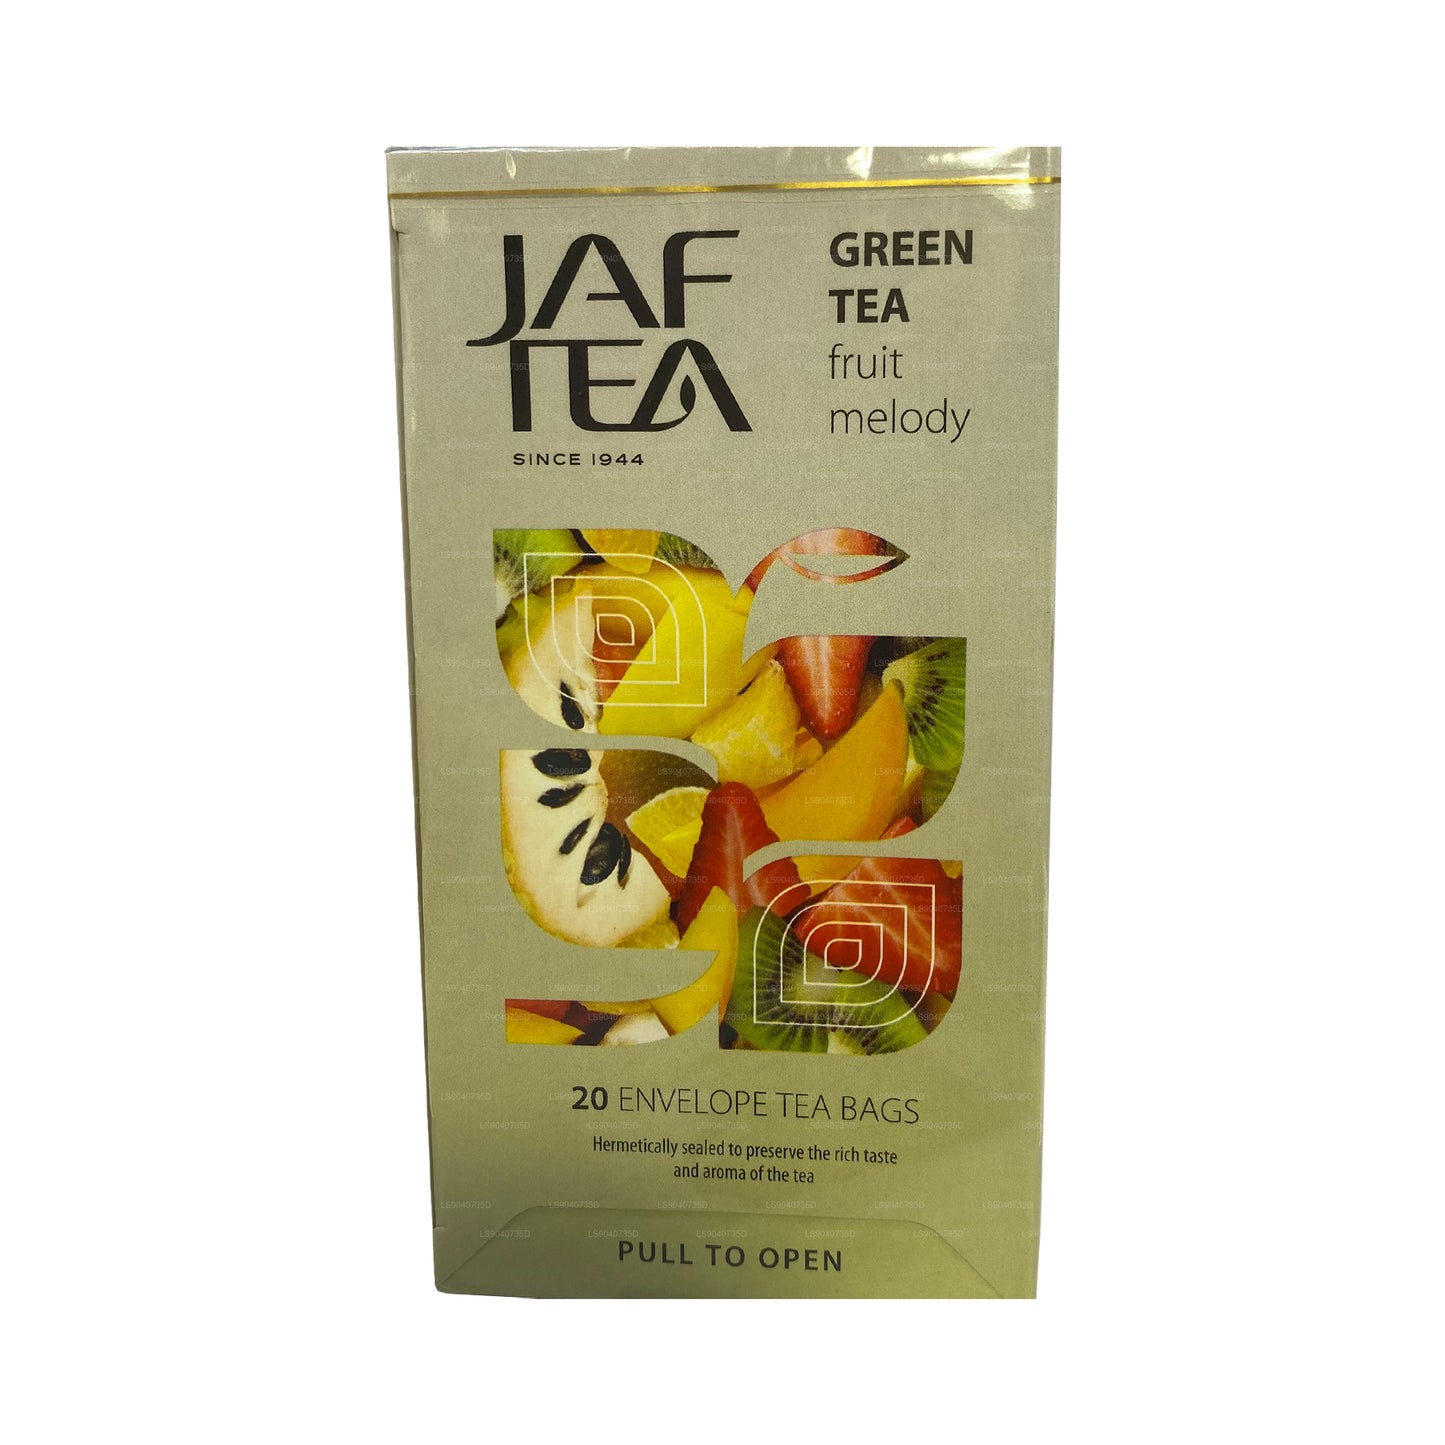 Jaf Tea Pure Green Collection Grüntee Fruit Melody (40 g) 20 Teebeutel